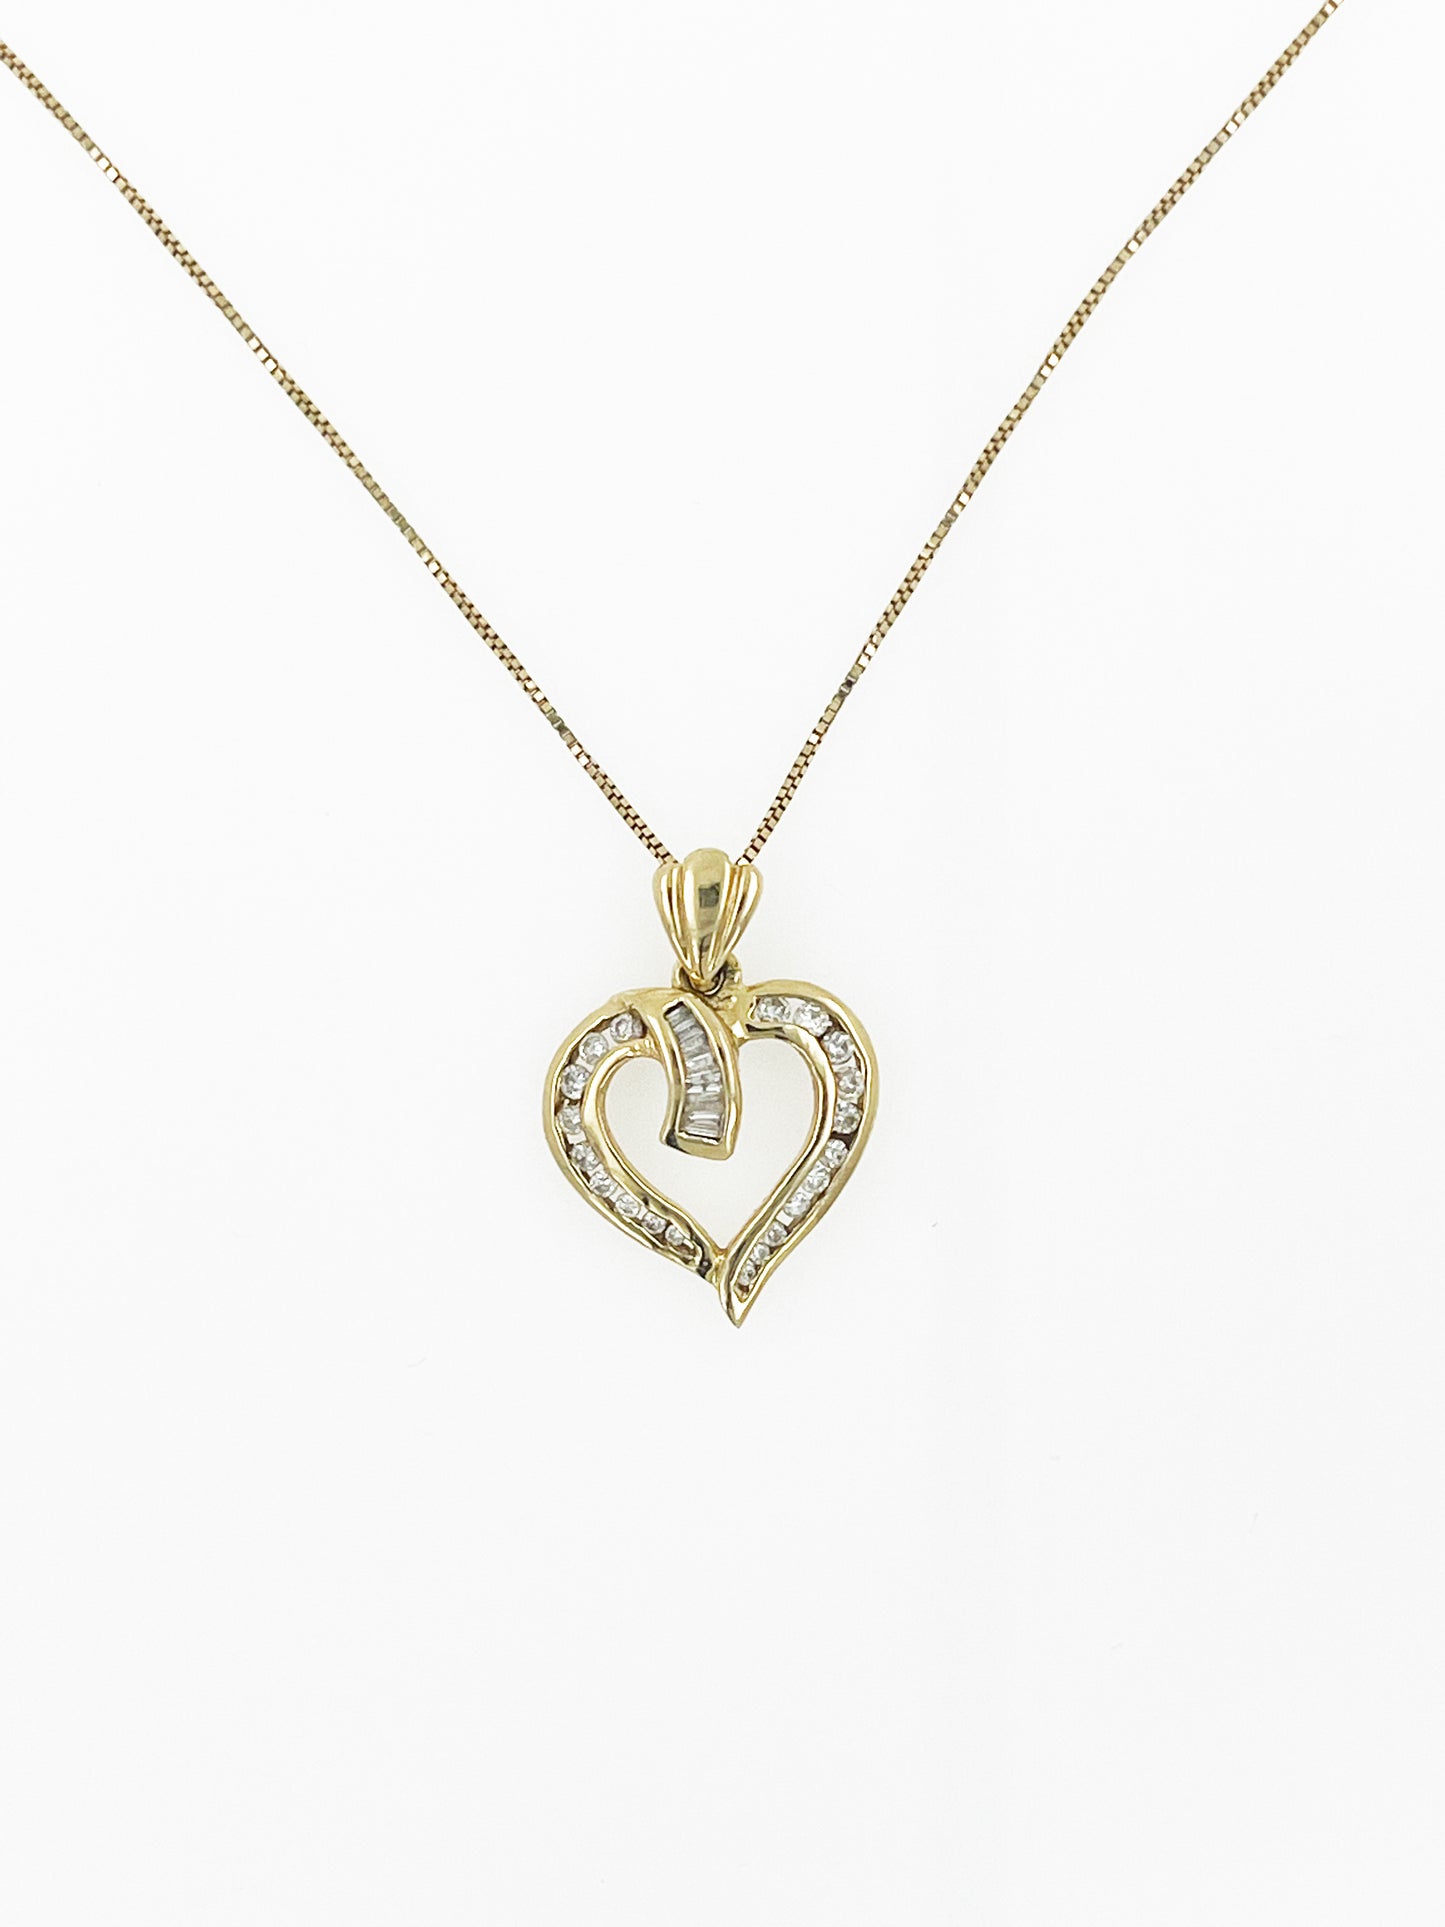 .4 Carat Diamond Heart Pendant in 14k Yellow